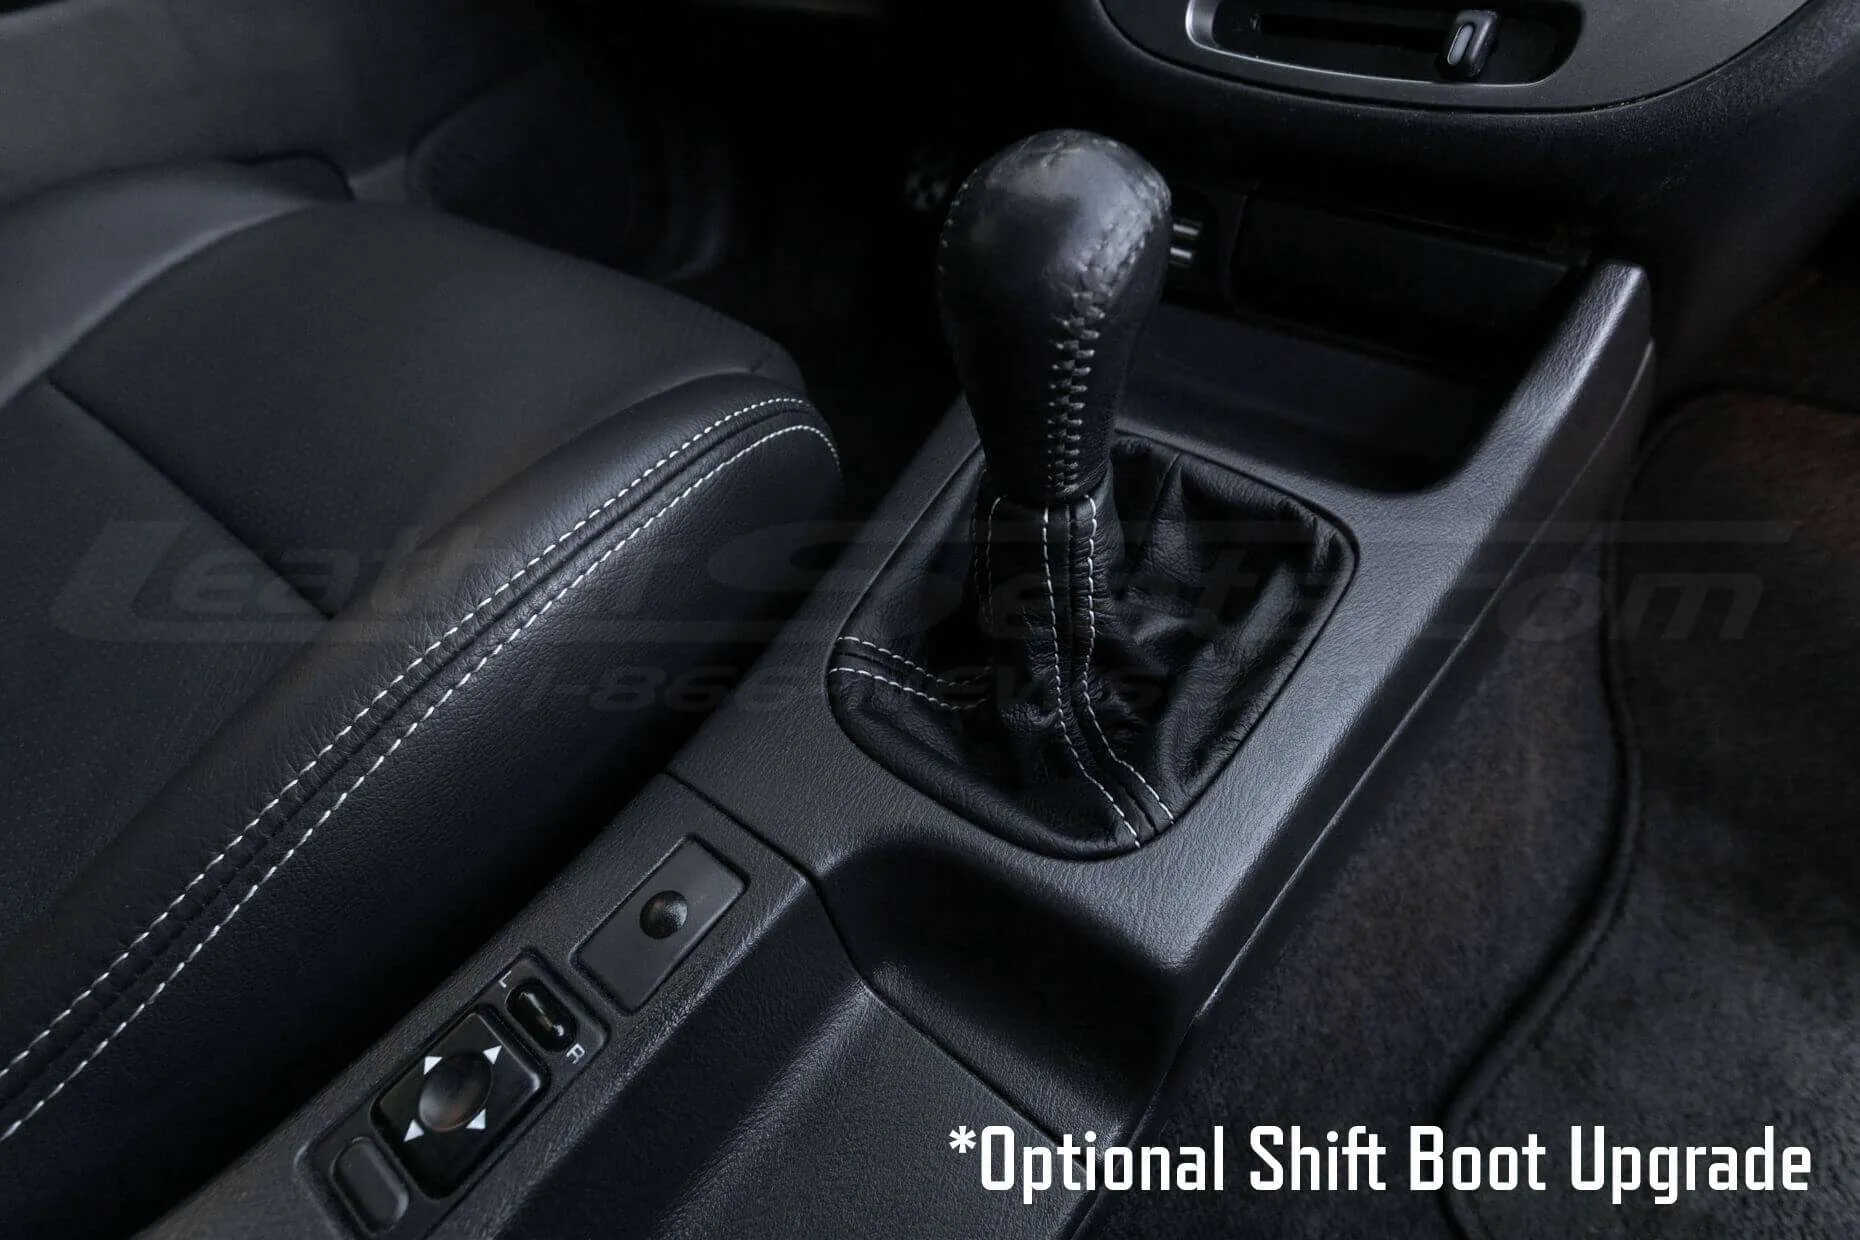 Optional Shift Boot